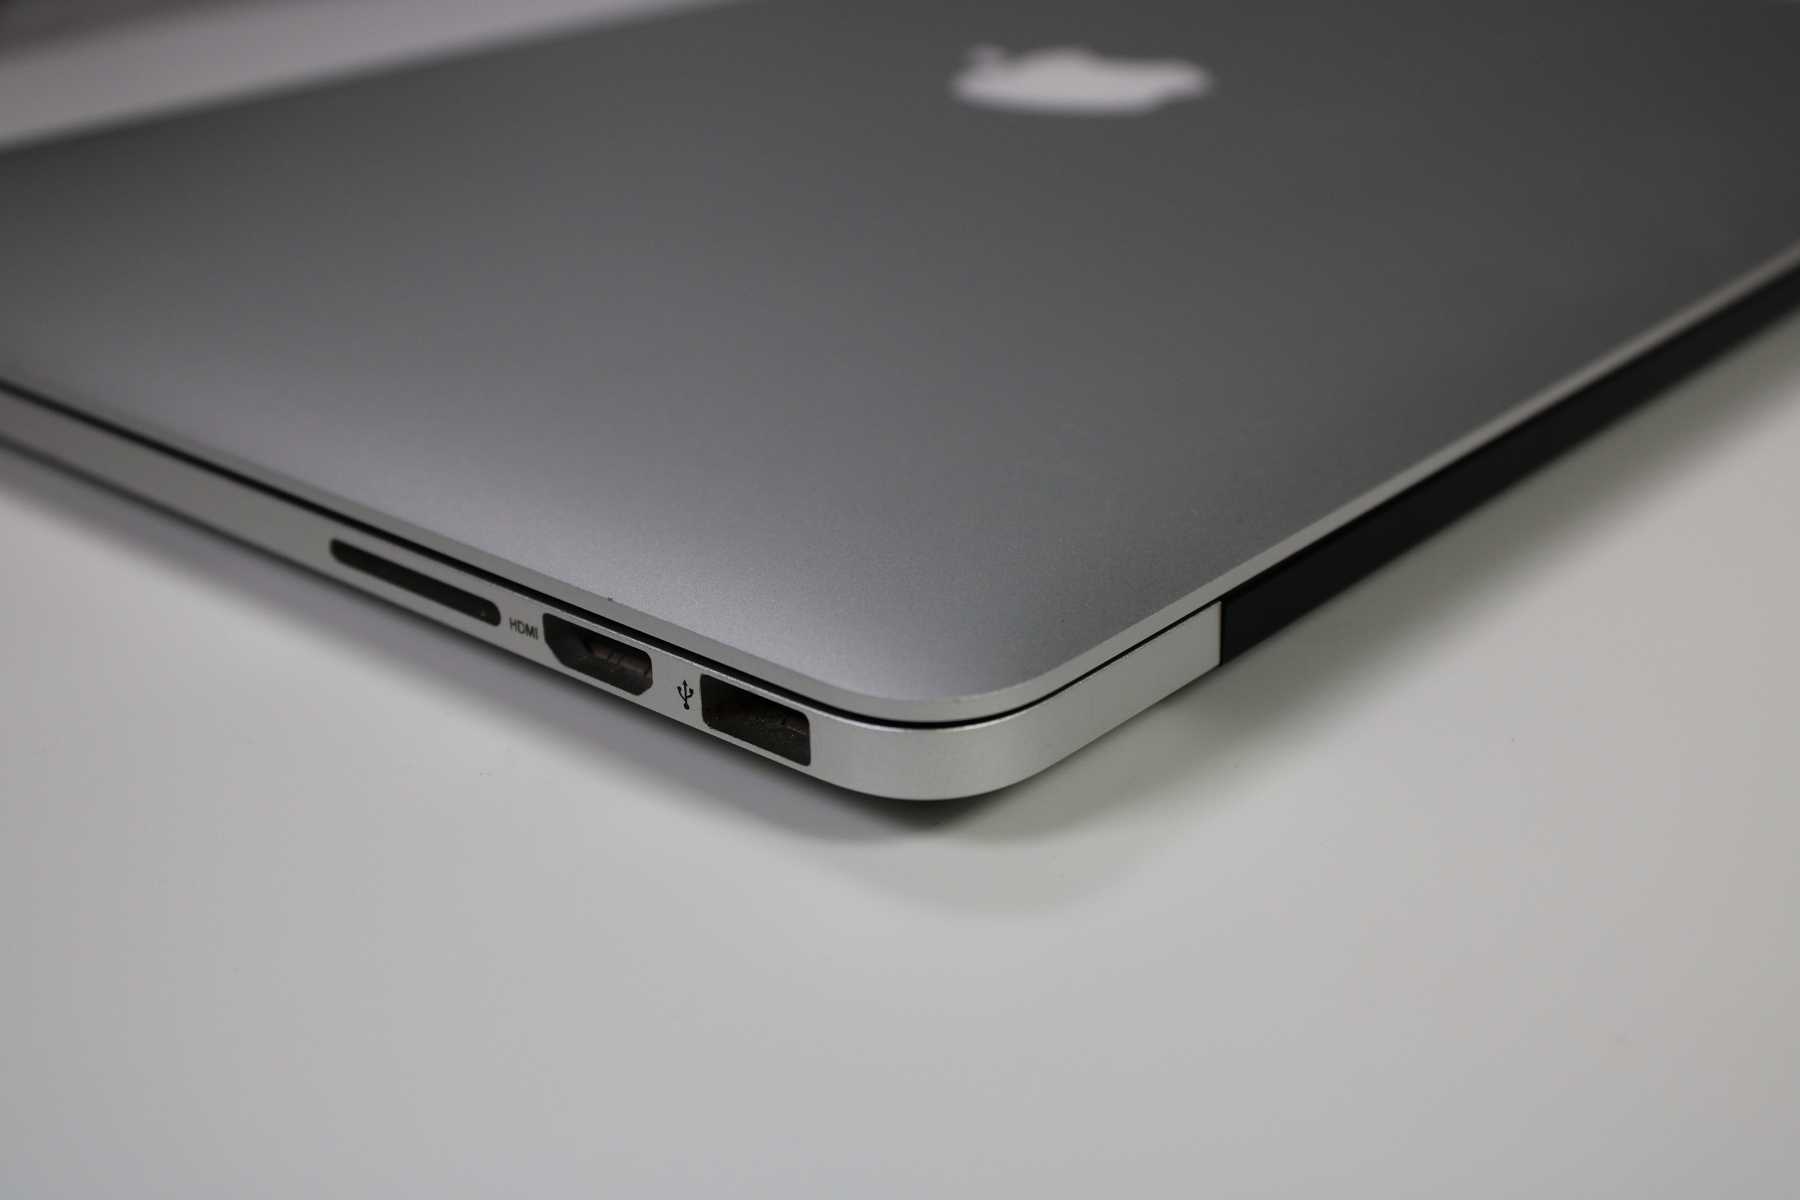 Apple MacBook Pro 15-inch 2015 2.5GHz Core i7 16GB RAM Dual GPU (Wear & Tear Special)